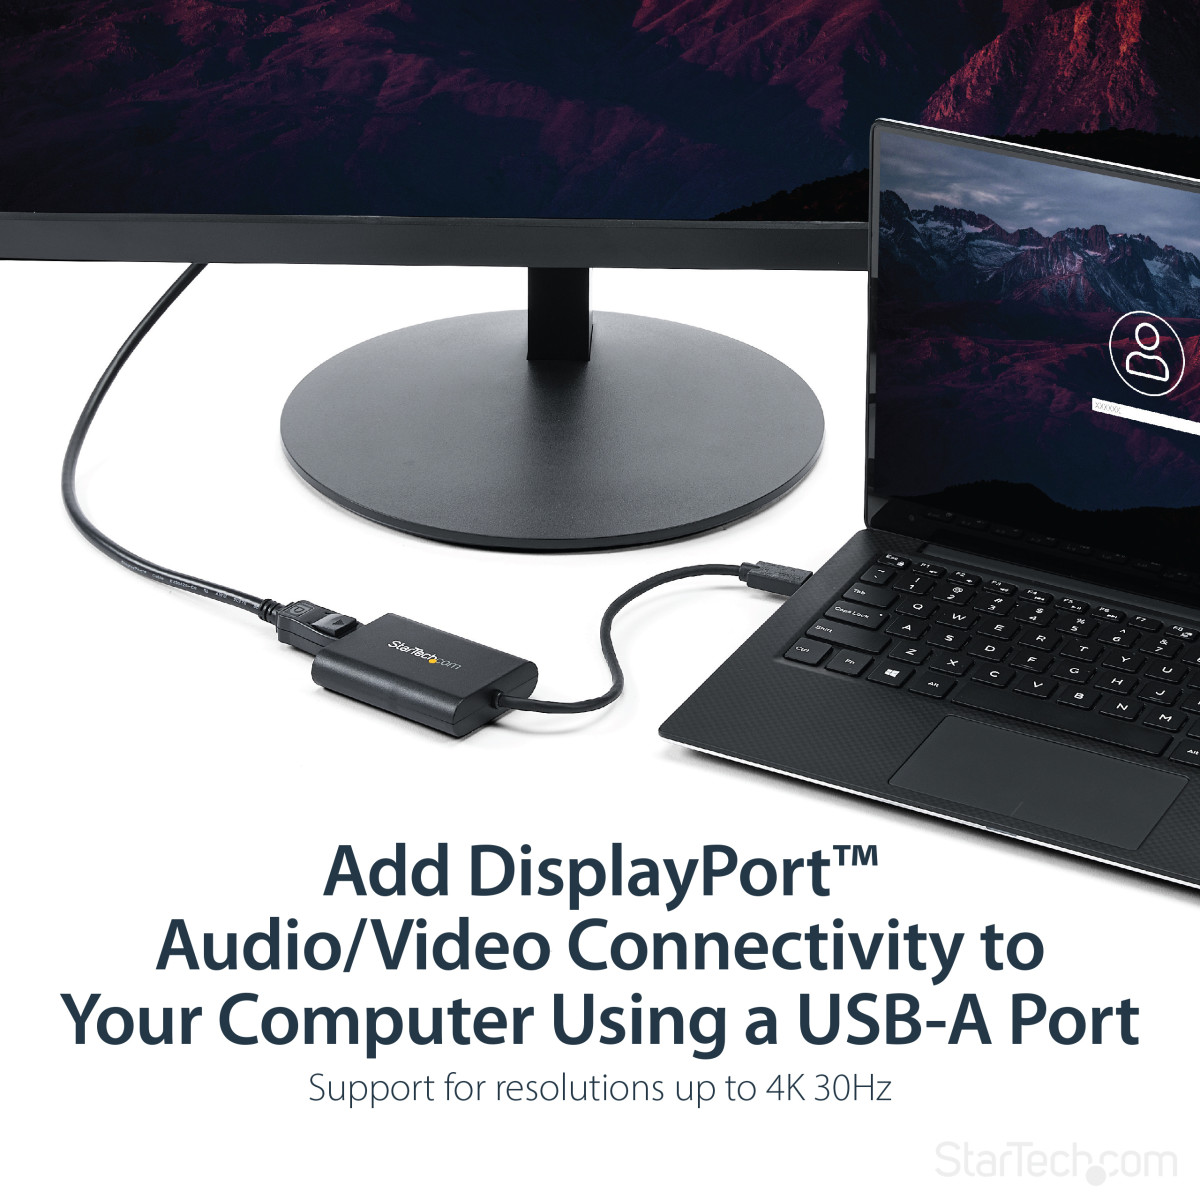 Adapter 4K 30Hz - USB 3.0 to DisplayPort